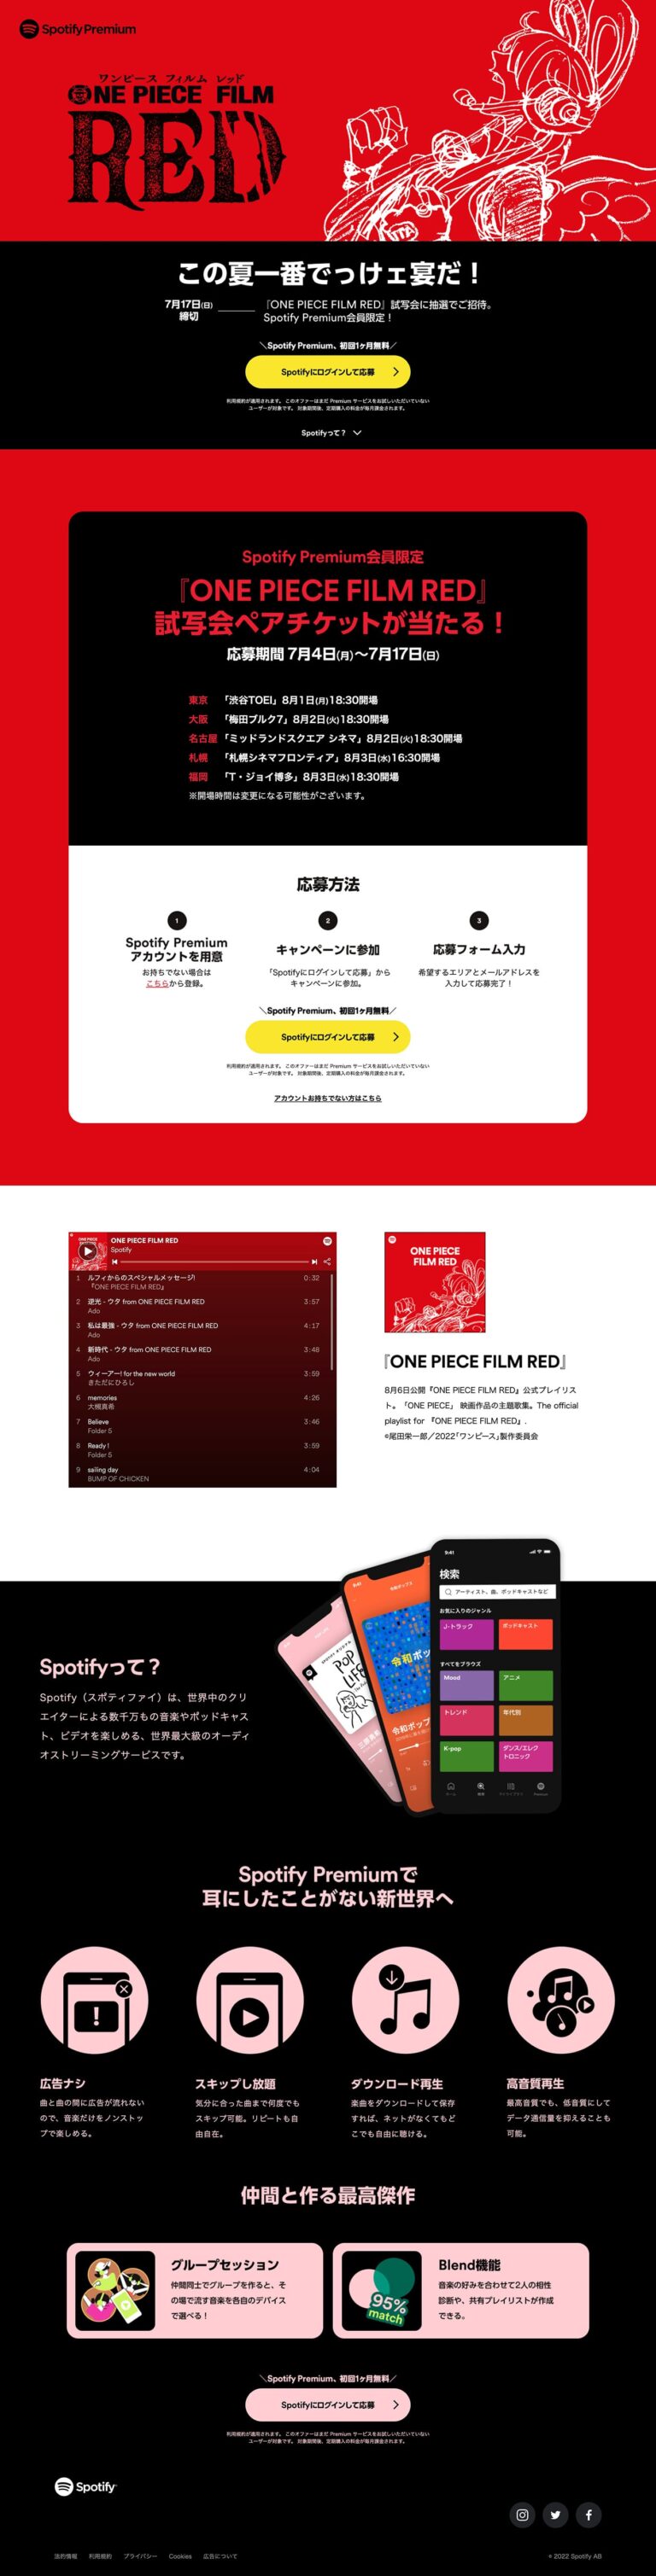 『ONE PIECE FILM RED』試写会に抽選でご招待 | Spotify Premium